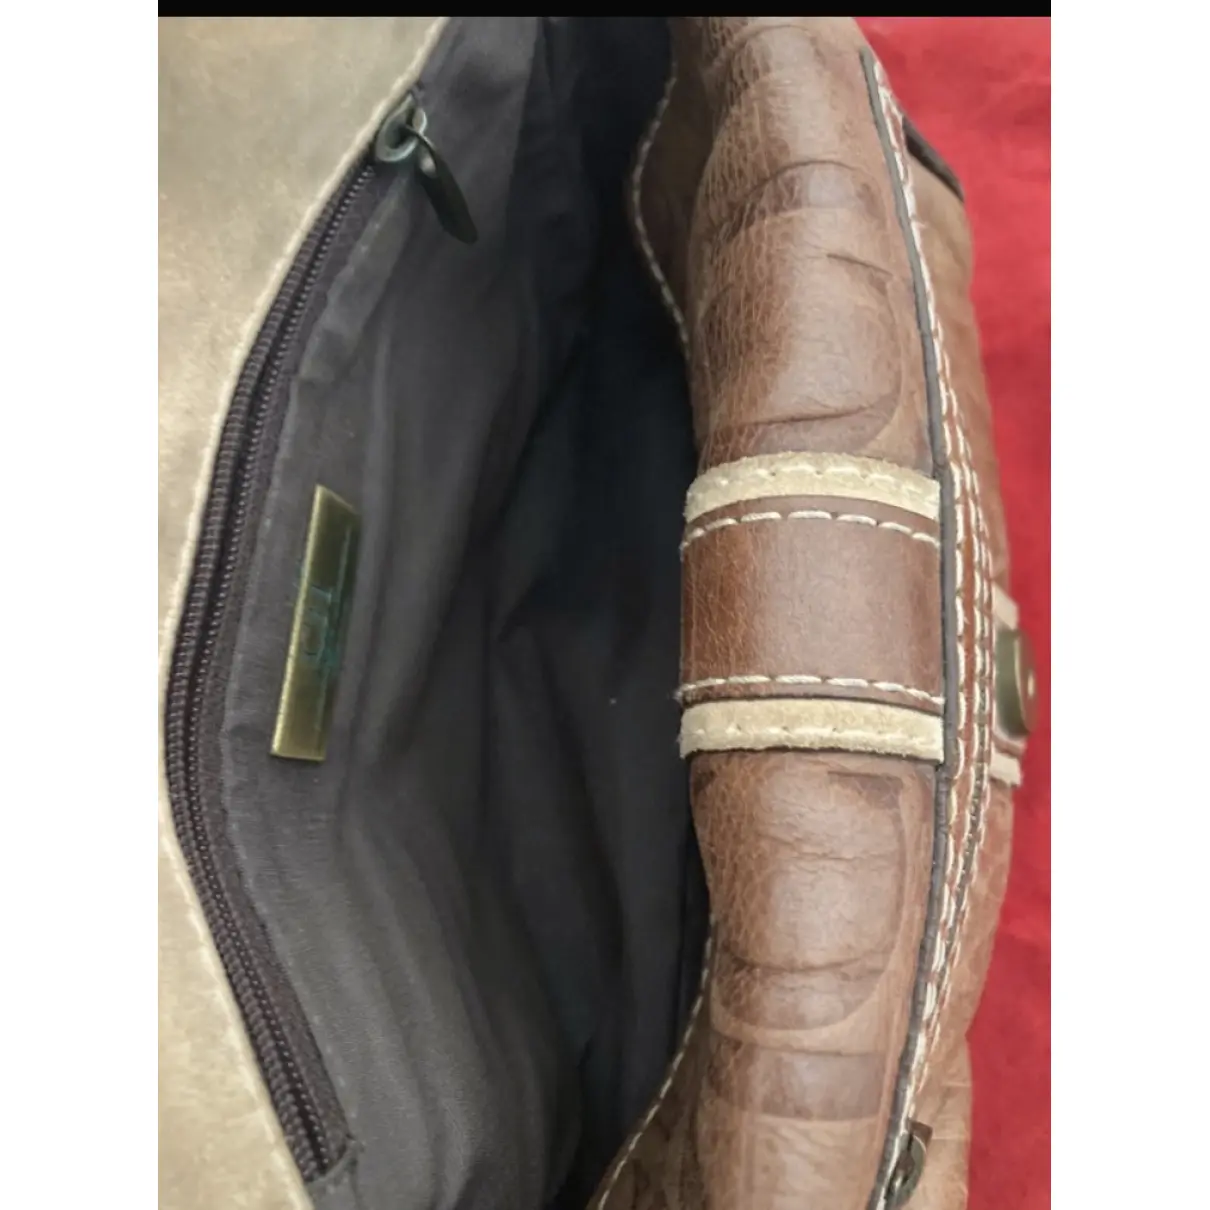 Leather clutch bag Carolina Herrera